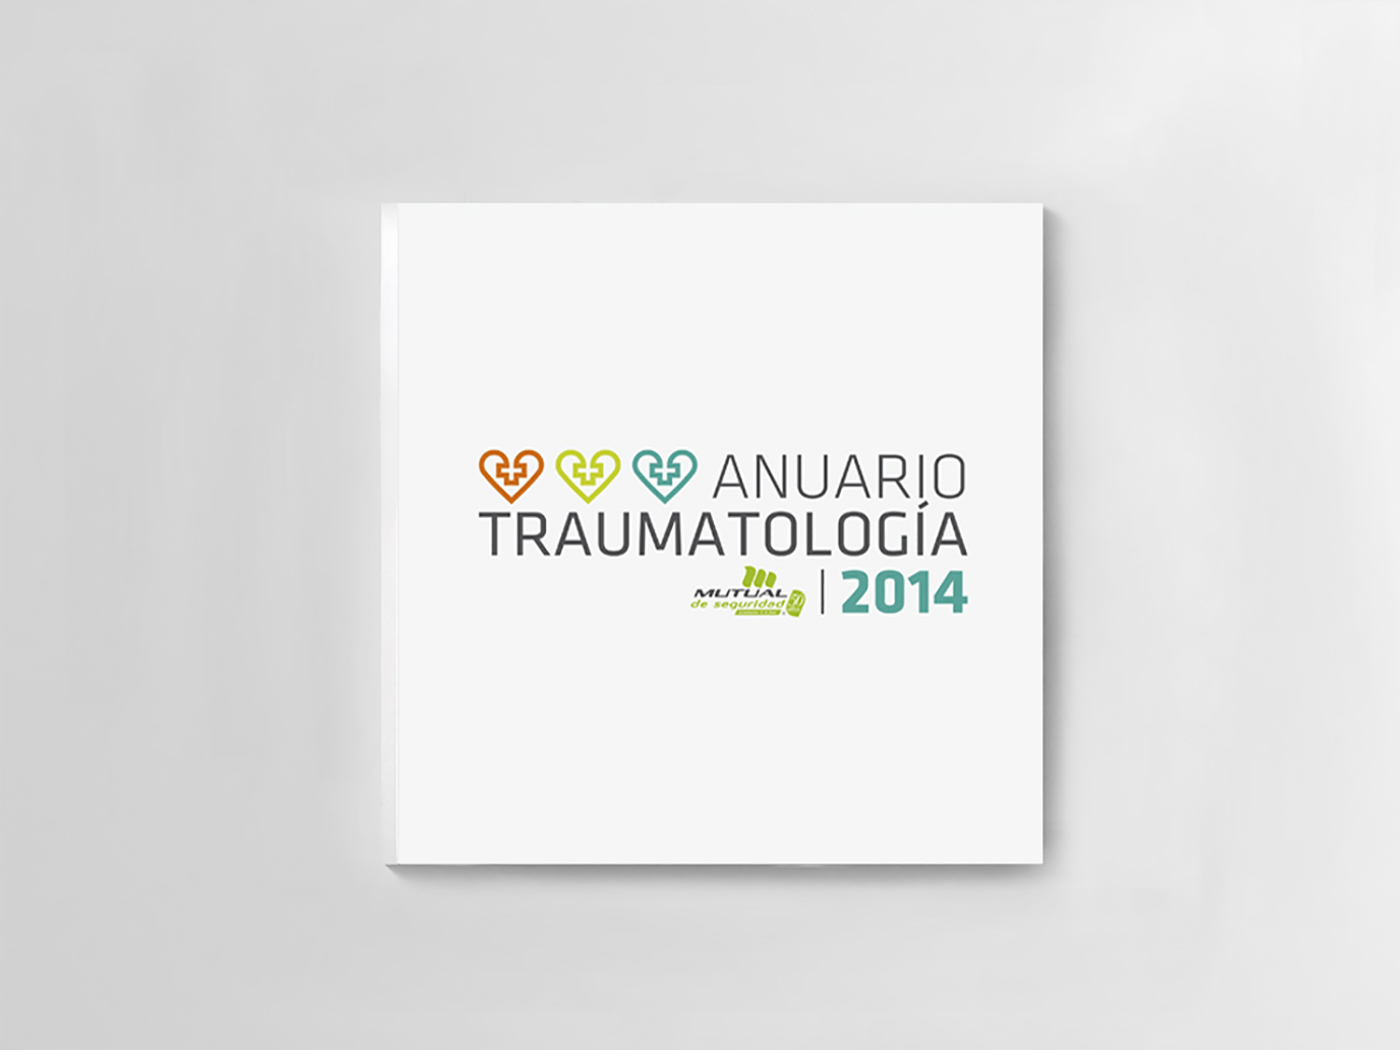 annual report ANNUAL anuario Mutual traumatología traumatology